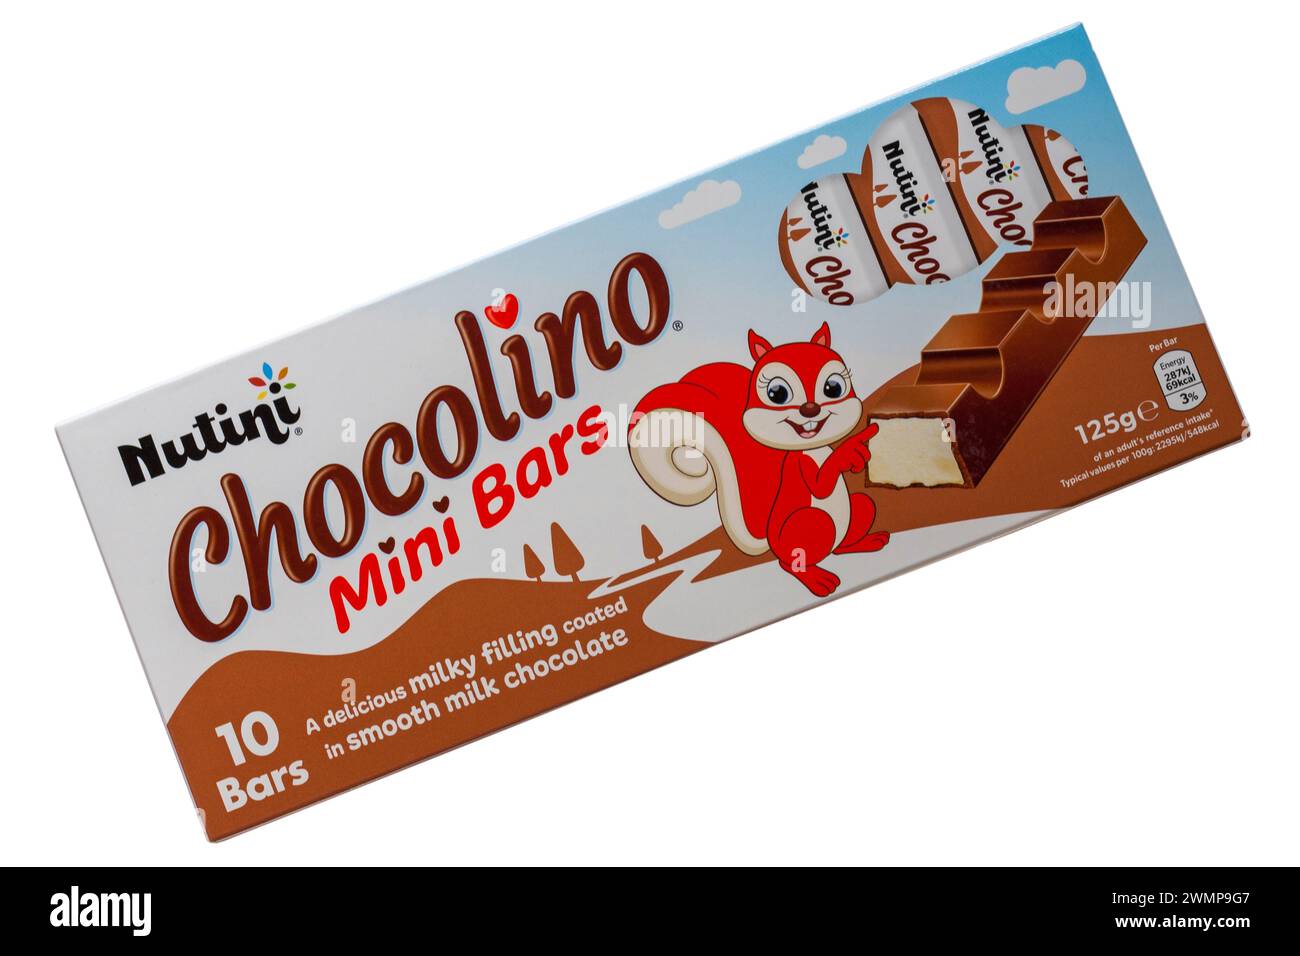 Paket Nutini Chocolino Minibars isoliert auf weißem Hintergrund Stockfoto